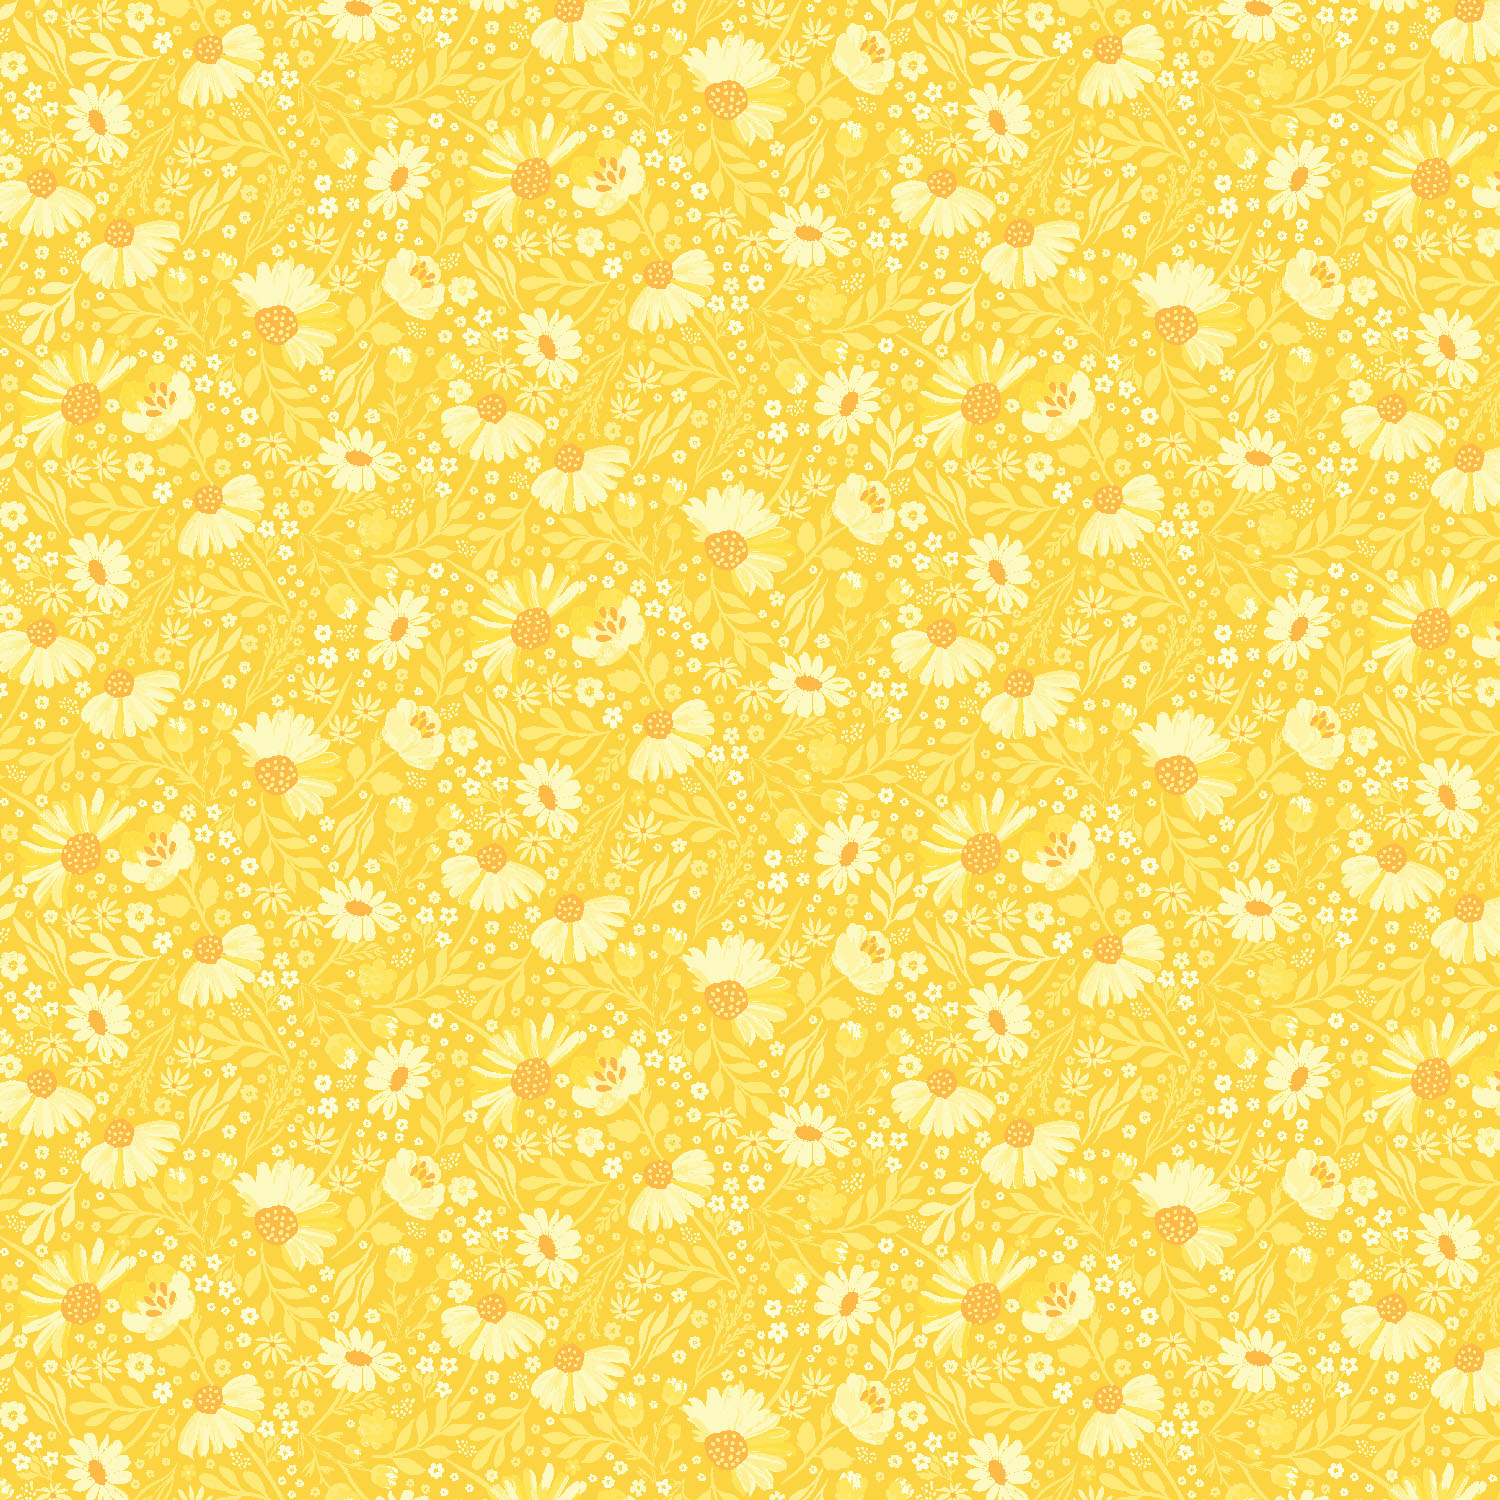 Meadowland By Rjr Studio For Rjr Fabrics - Golden Yellow